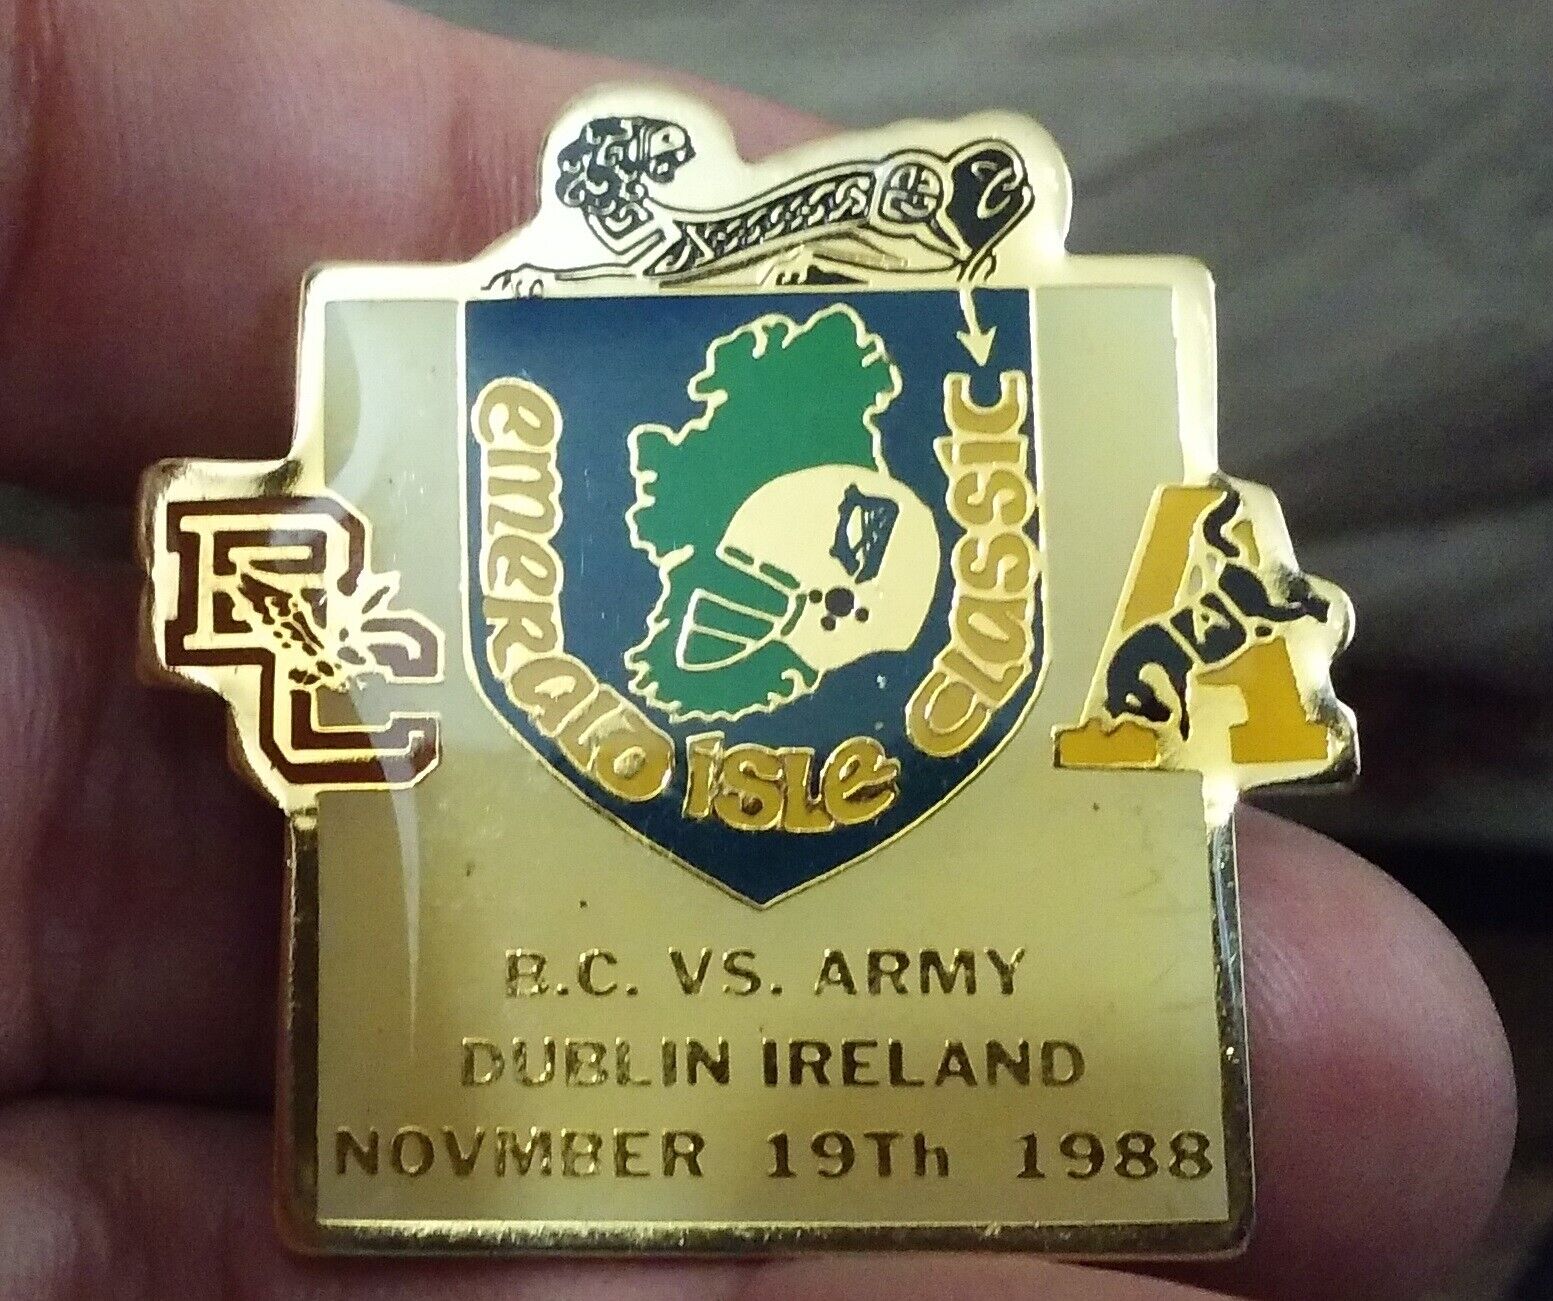 Boston College vs Army Football Game in Dublin Ireland 1988 pin badge has a typo